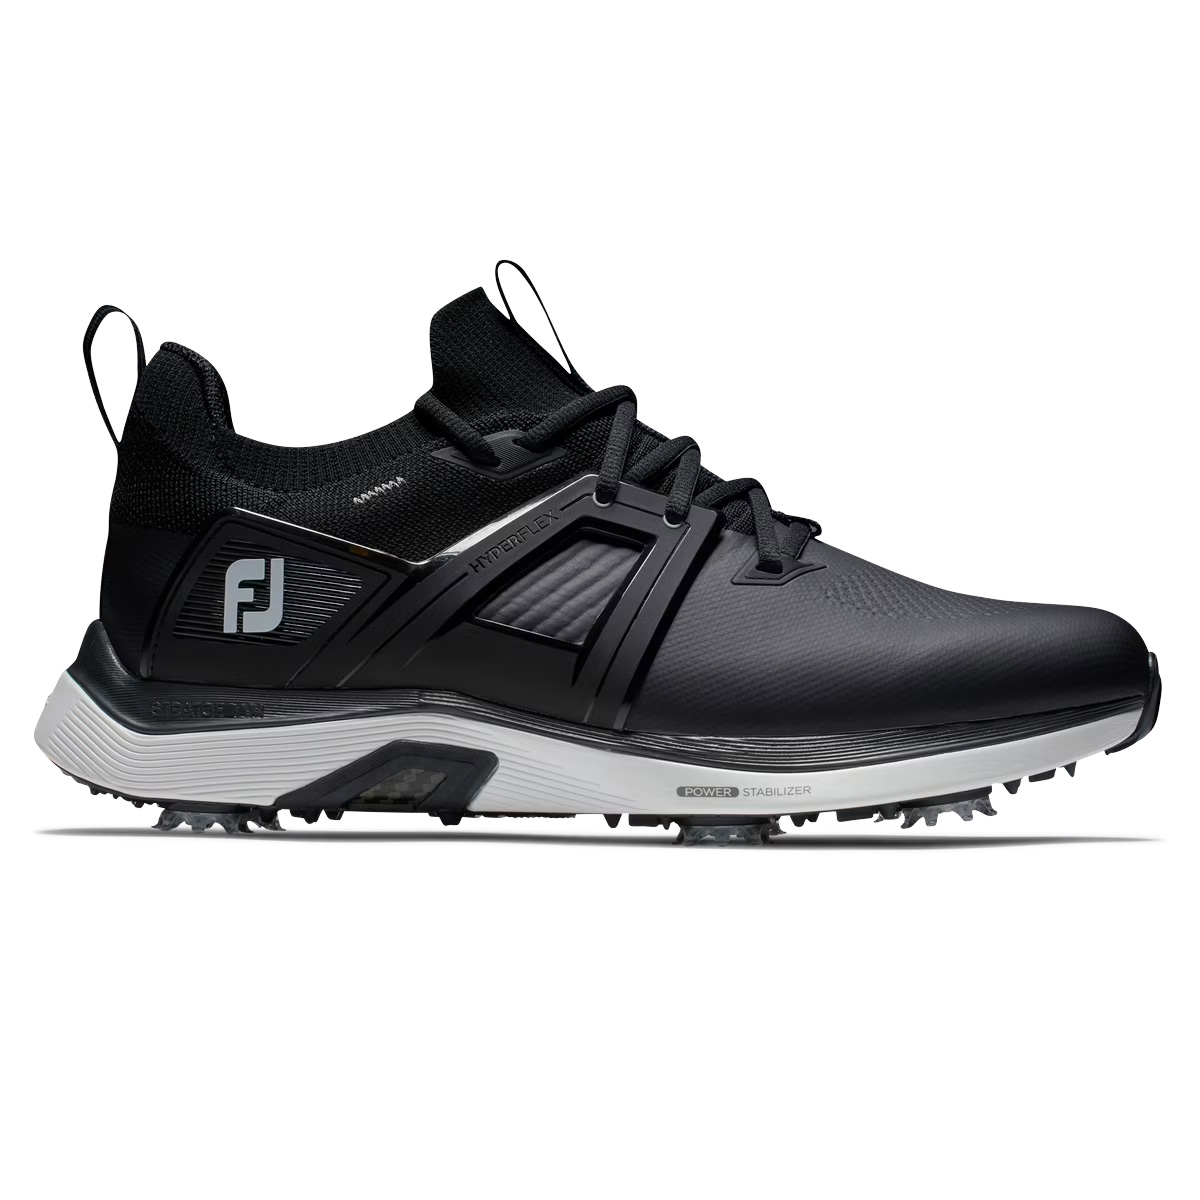 FootJoy Hyperflex Carbon Mens Spiked Golf Shoes  - Black/White/Grey